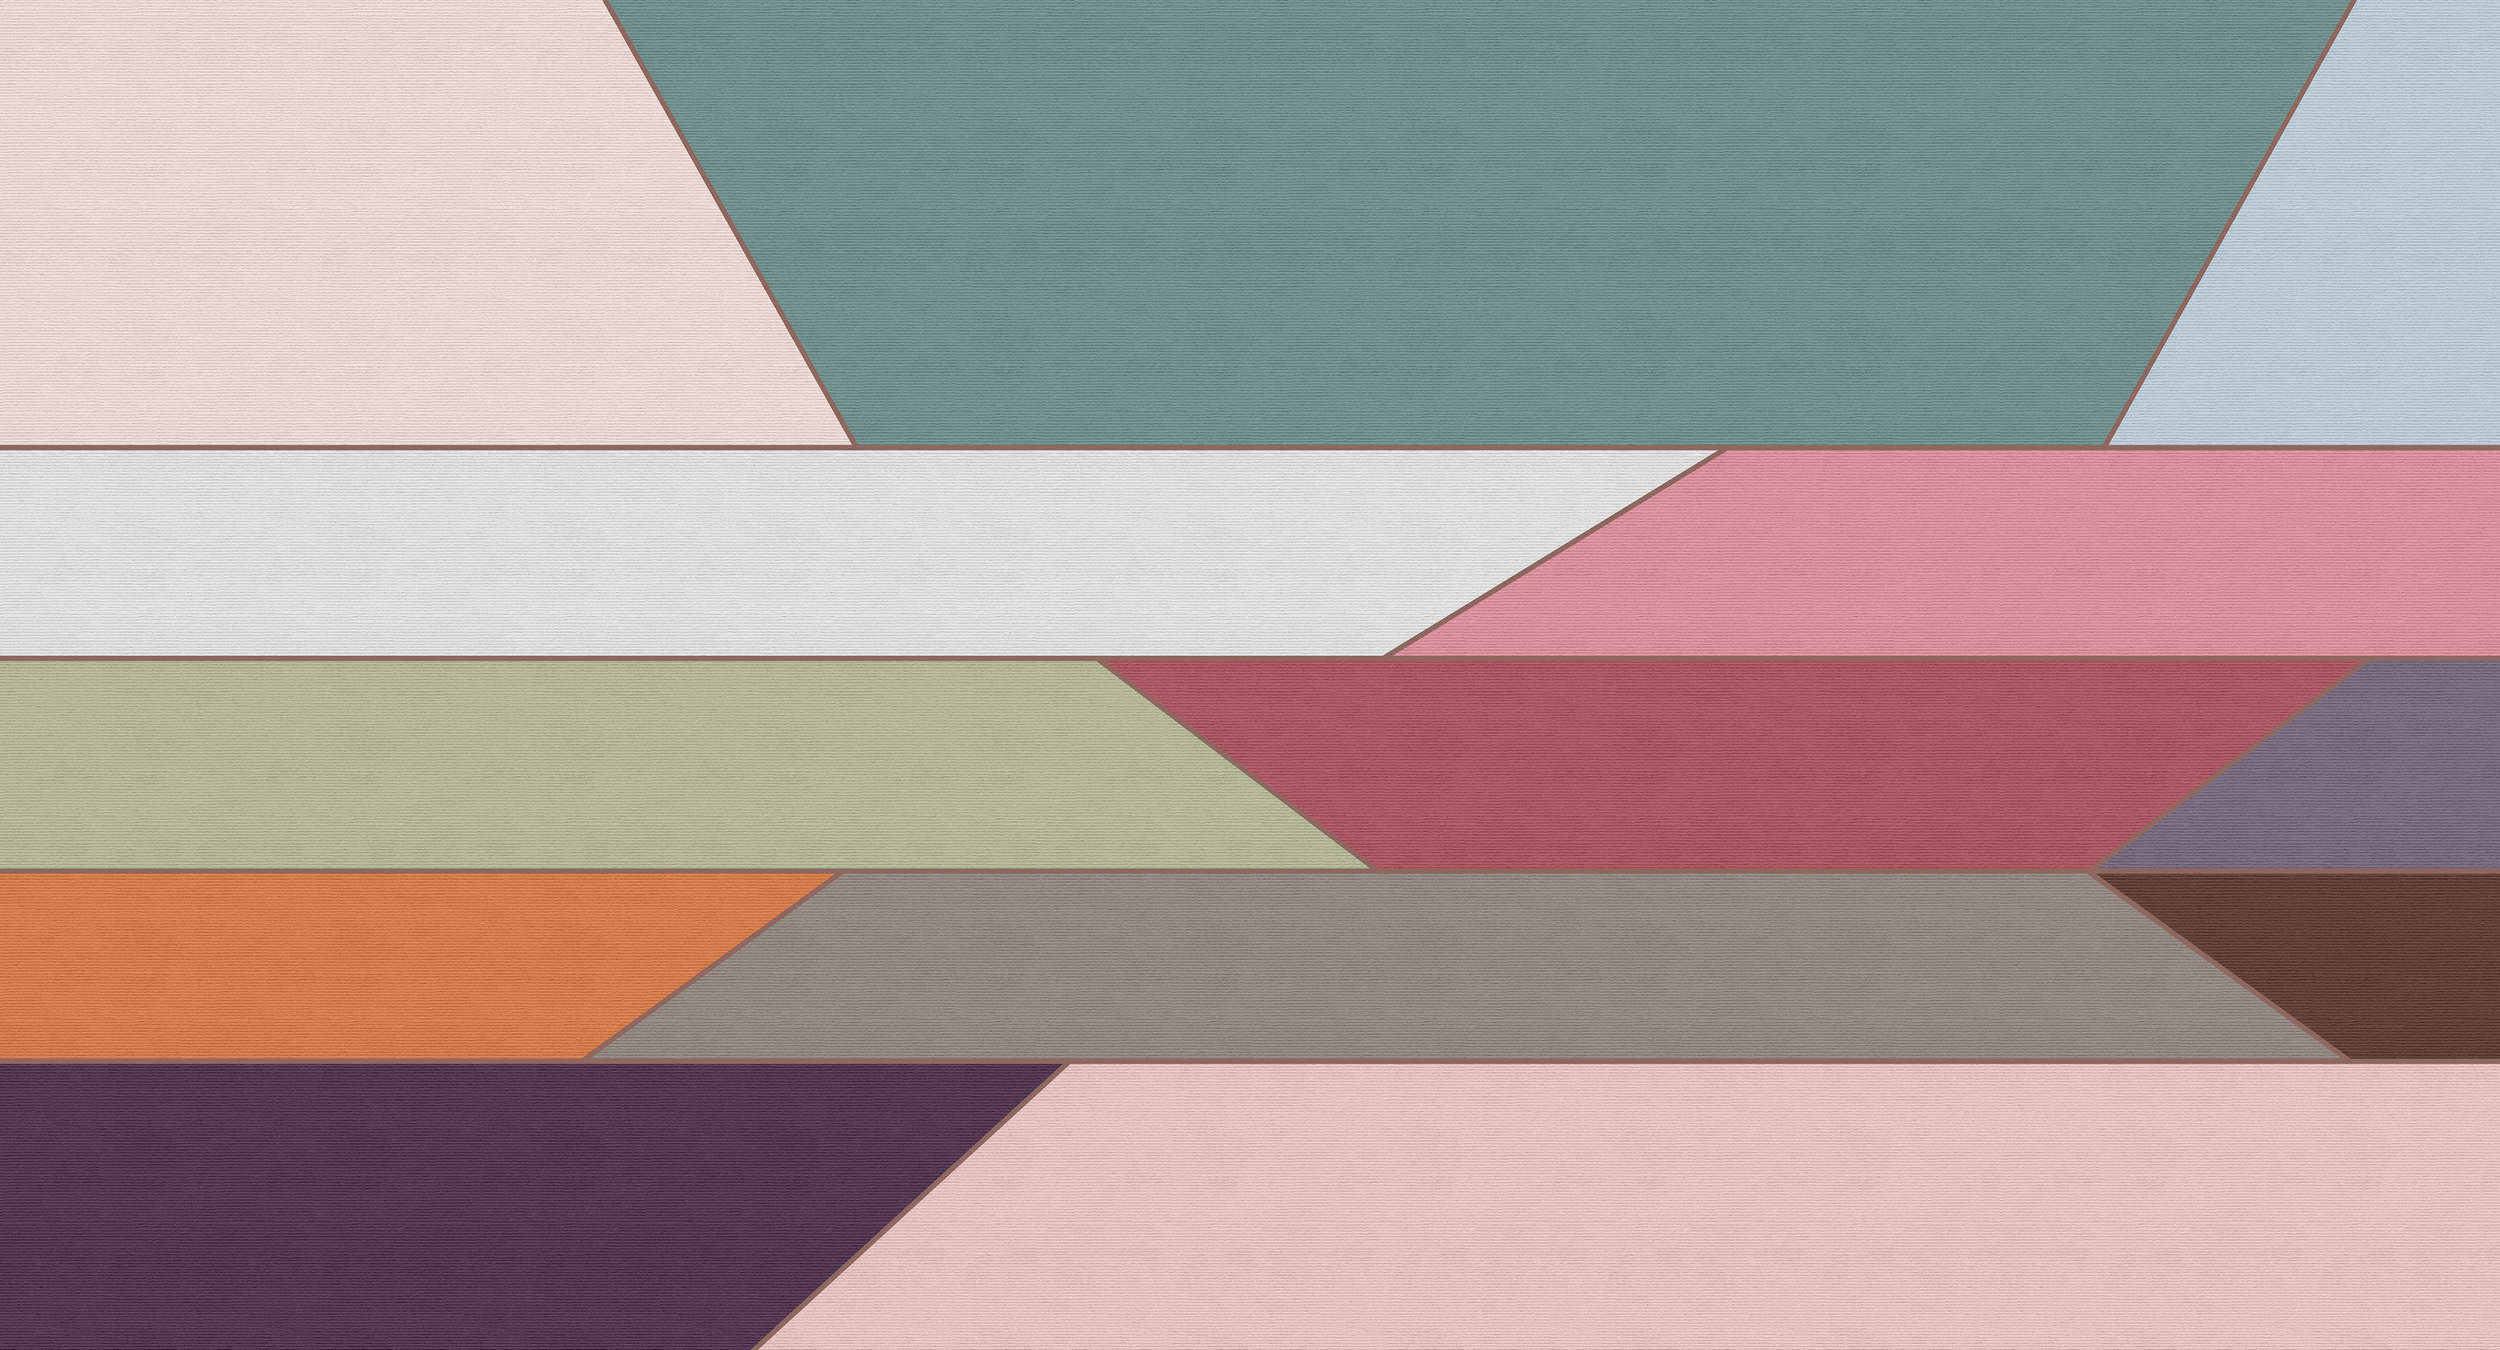             Geometry 2 - Fotomurali a righe orizzontali colorate con struttura a coste - Beige, Blu | Pile liscio premium
        